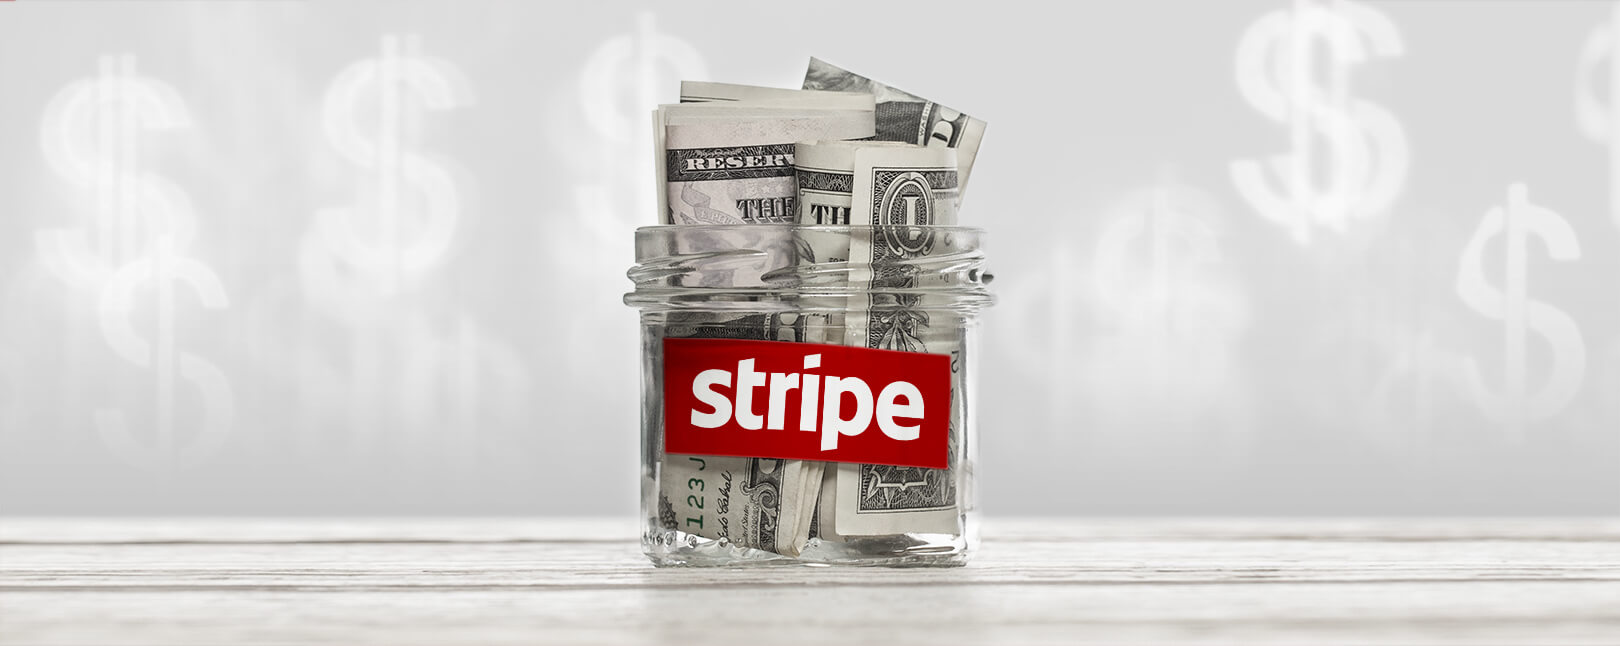 Stripe Chargeback Fees